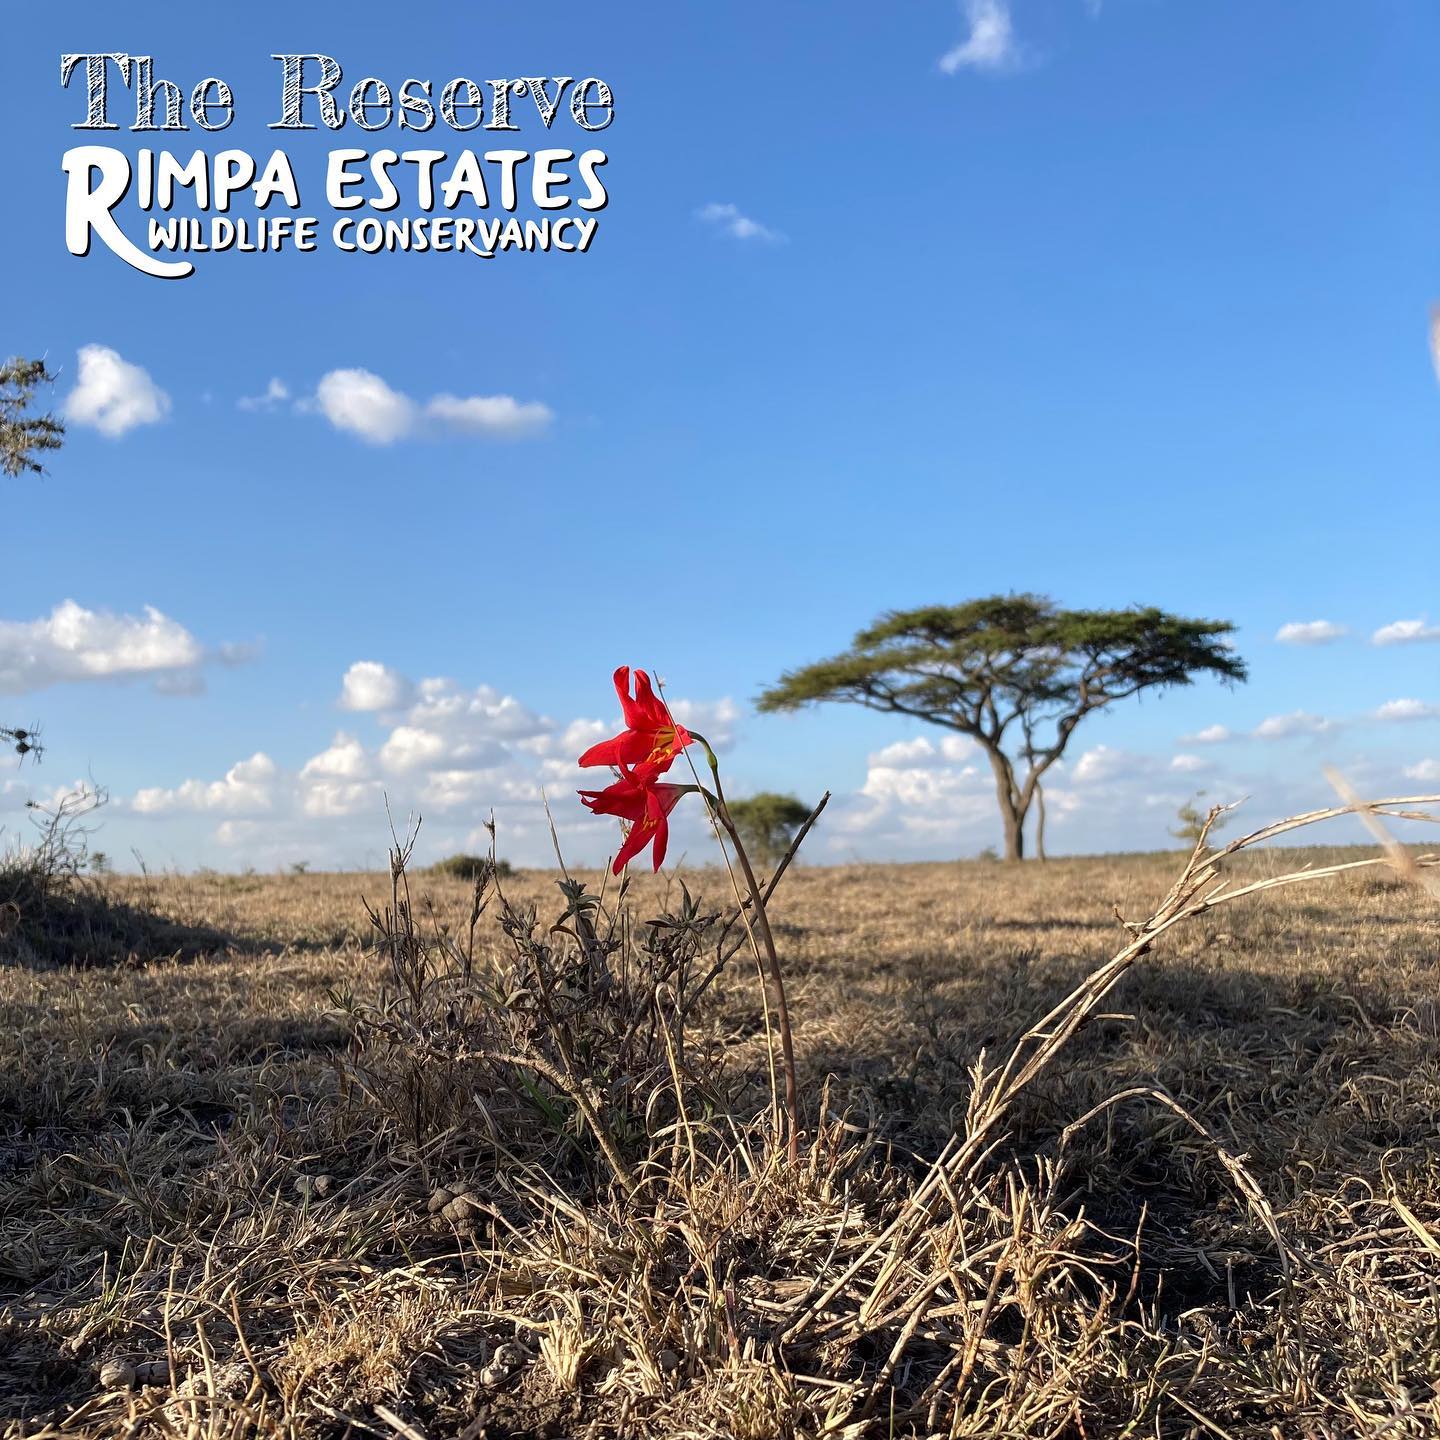 Even little things can inspire awe.
🌺
#naturenerd #onewithnature #wildlifeconservation #kenyagamedrive  #flowers #kenyawildlife #wildlifekenya #thereserve #rimpaestates